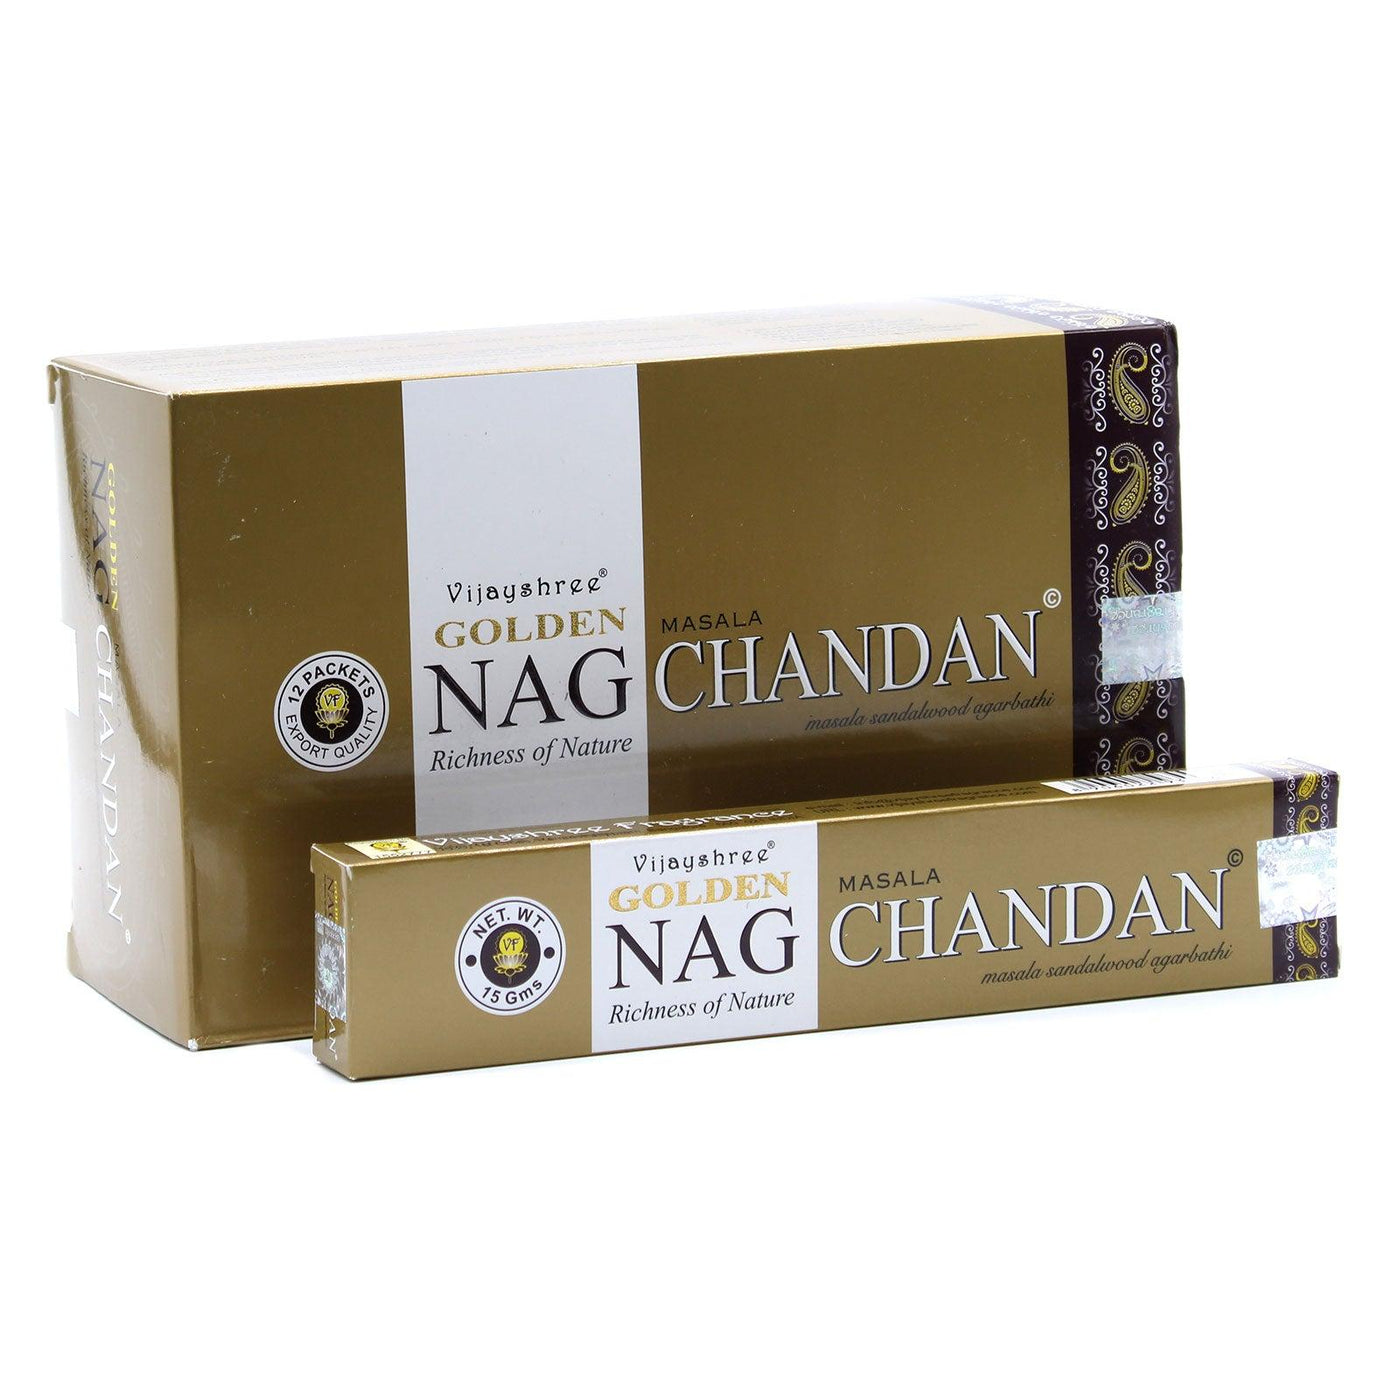 Golden Nag Champa Incense Sticks - Chandan.